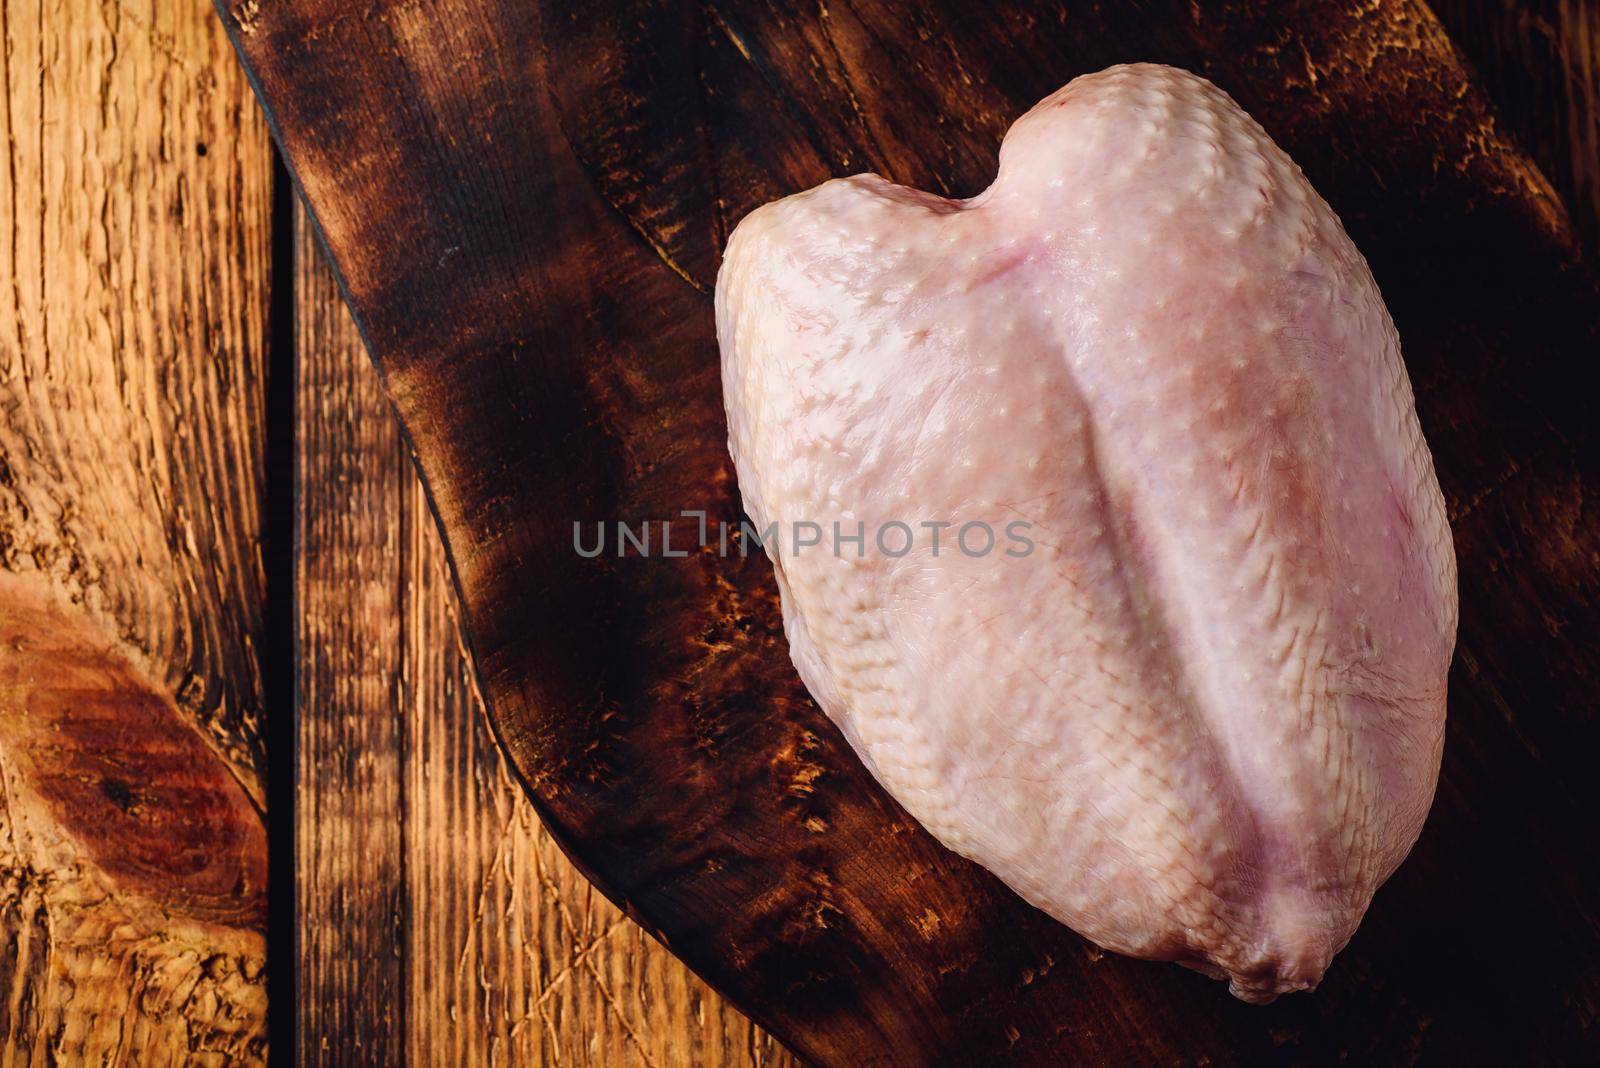 Raw chicken breast on chopping board by Seva_blsv